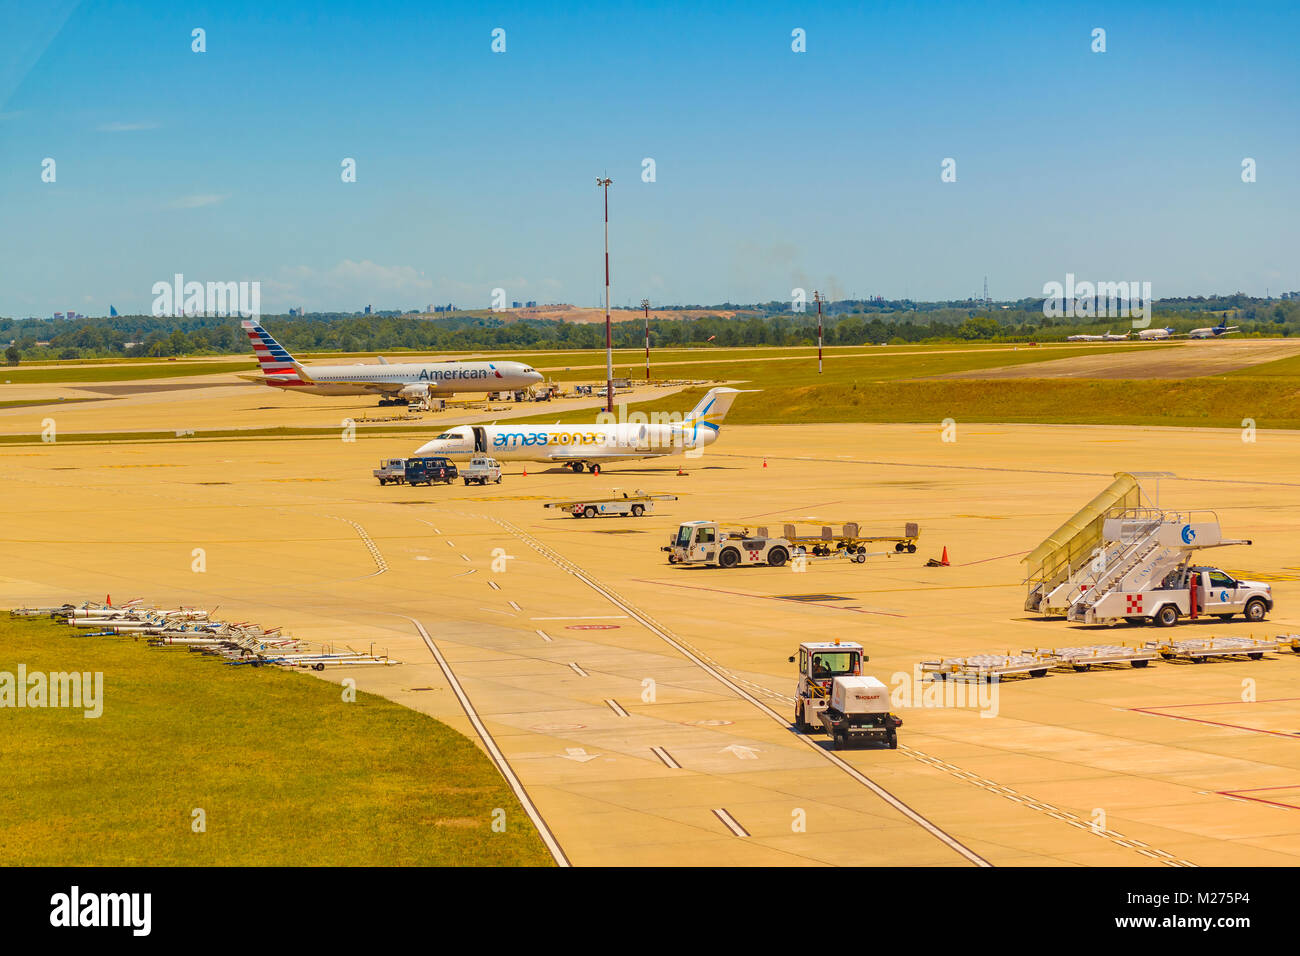 MONTEVIDEO, URUGUAY, DECEMBER - 2017 - High angle view of runway zone at aeropuerto internacional de carrrasco, Montevideo, Uruguay Stock Photo